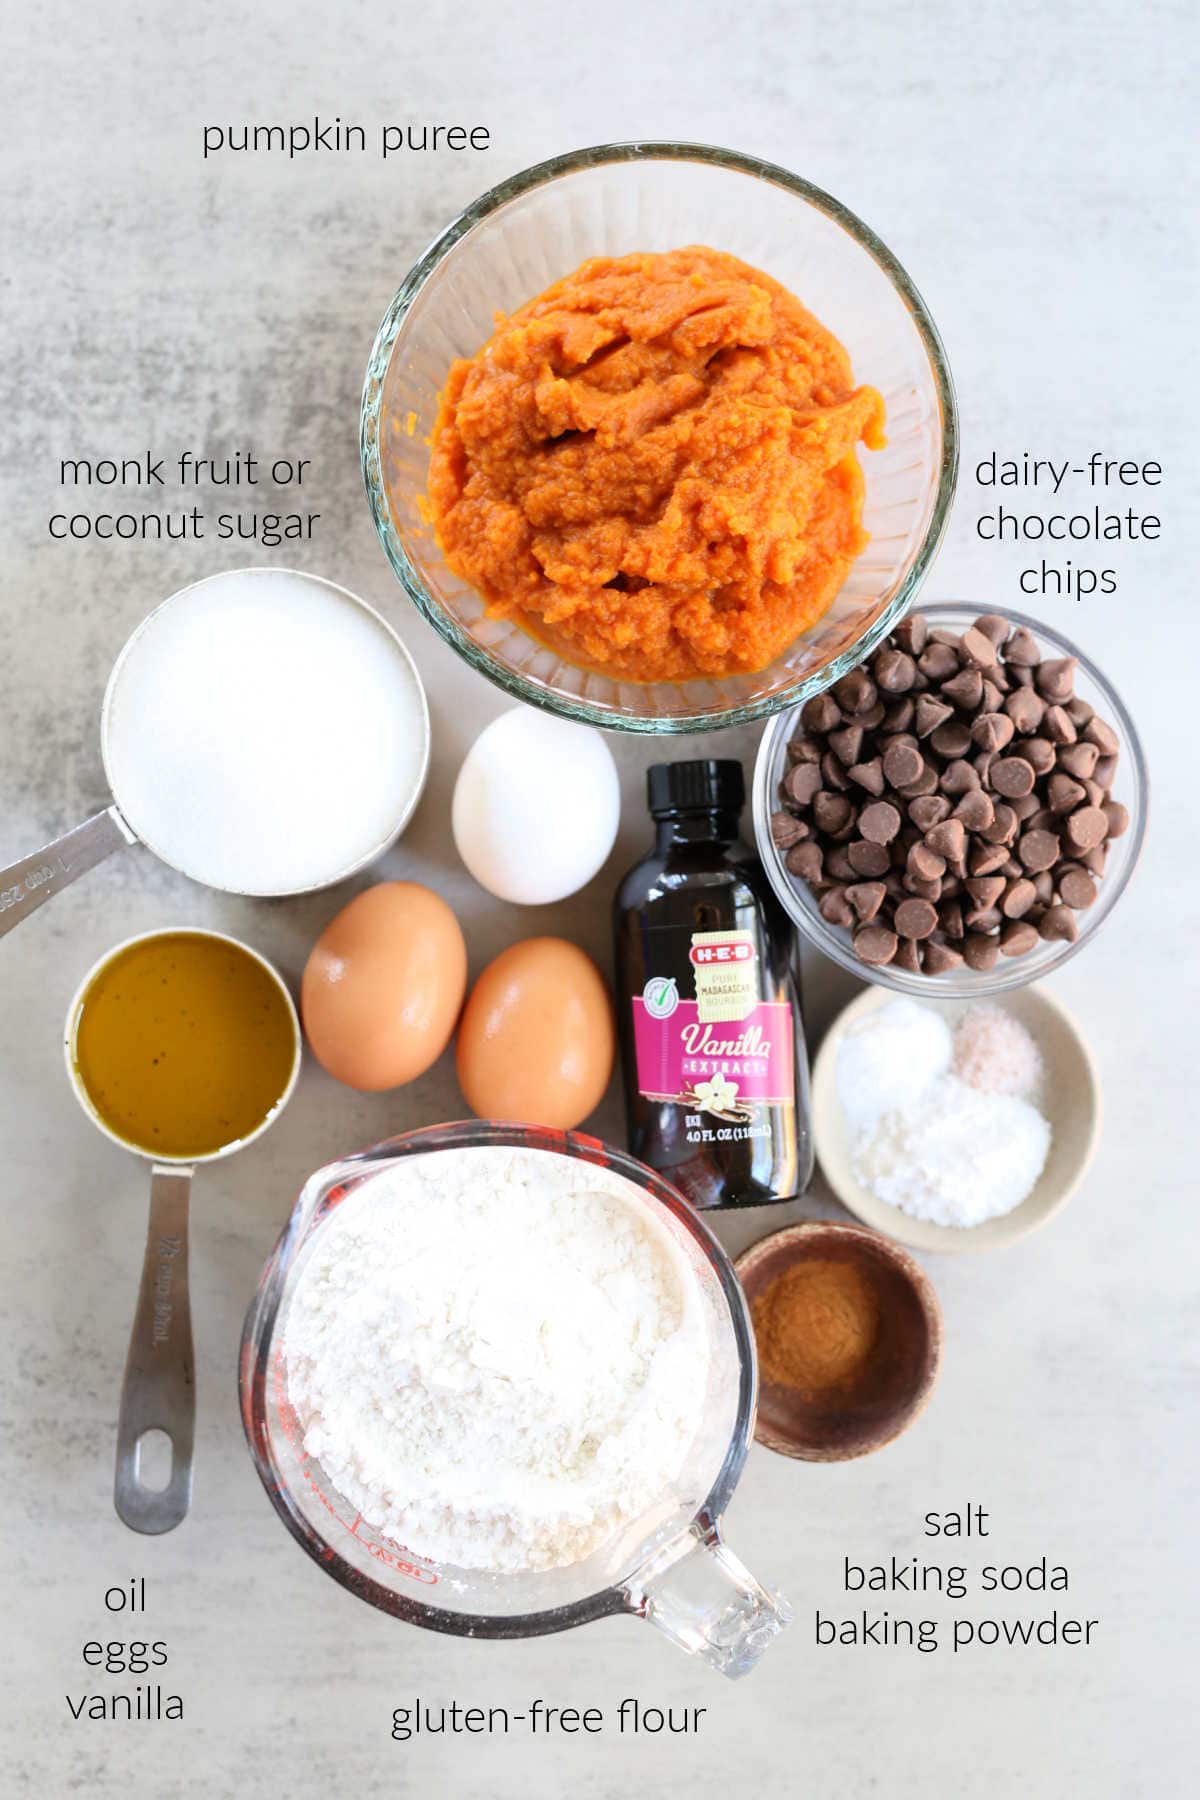 pumpkin puree, gluten-free flour, chocolate chips, oil, eggs, vanilla, leavening agent ingredients for muffins